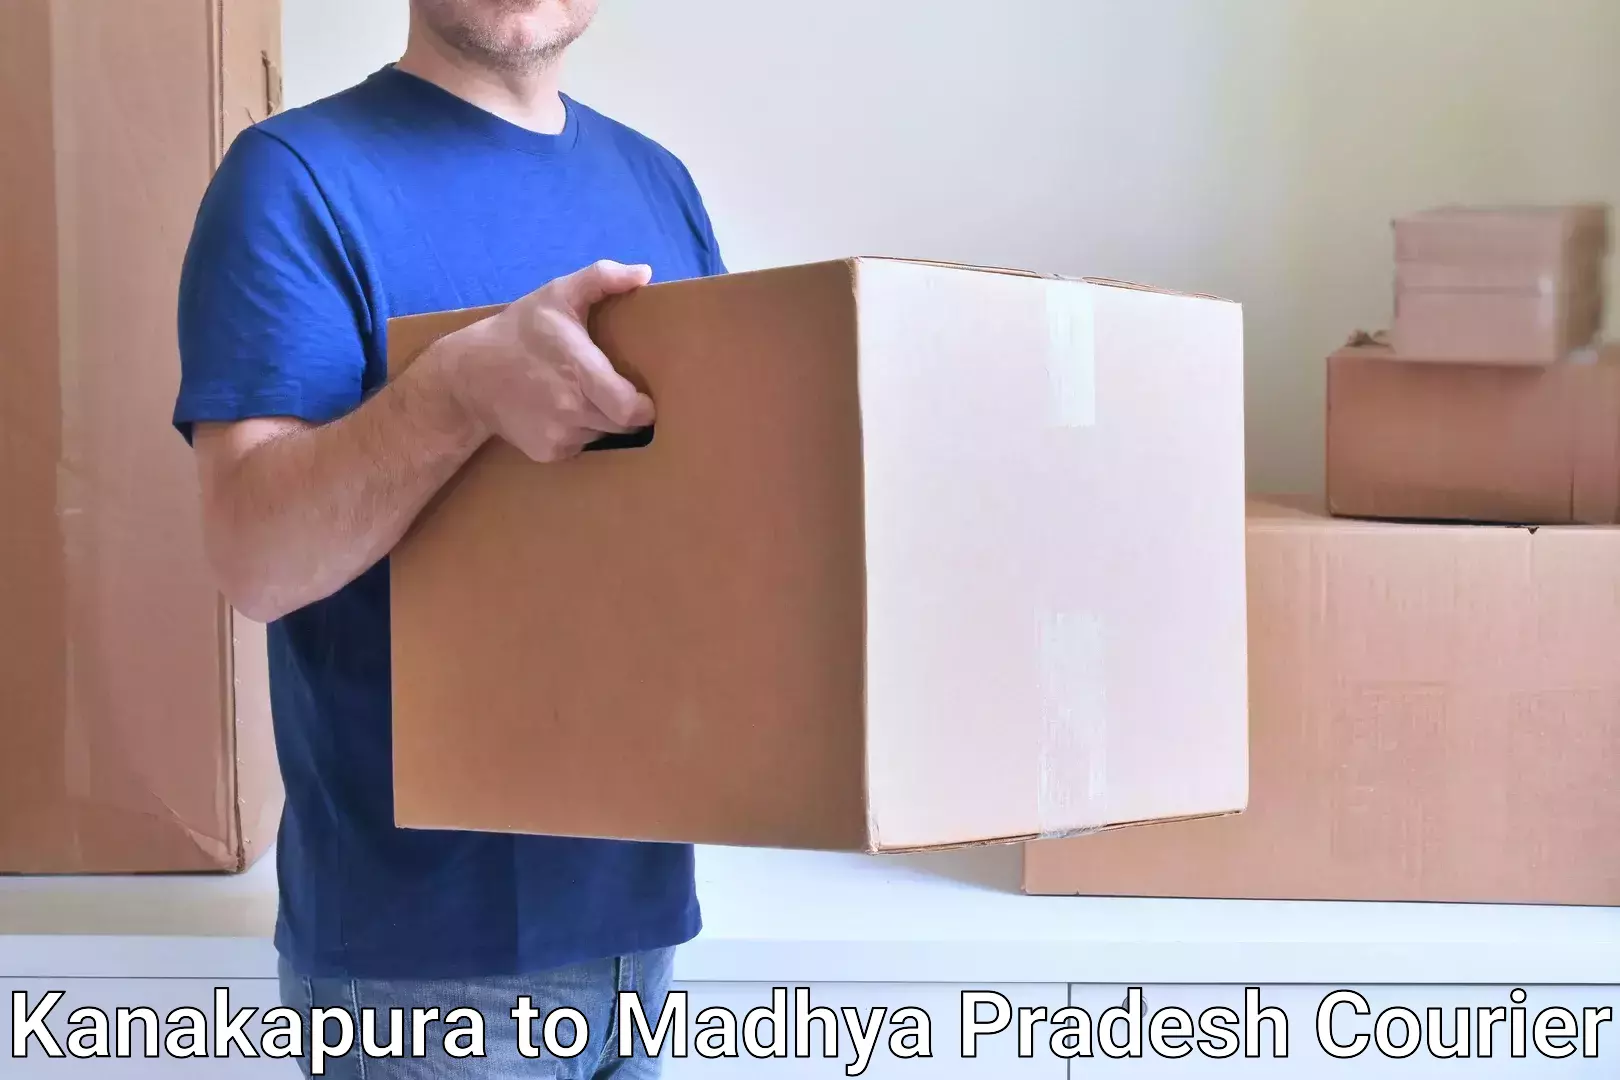 Reliable courier service in Kanakapura to Ujjain